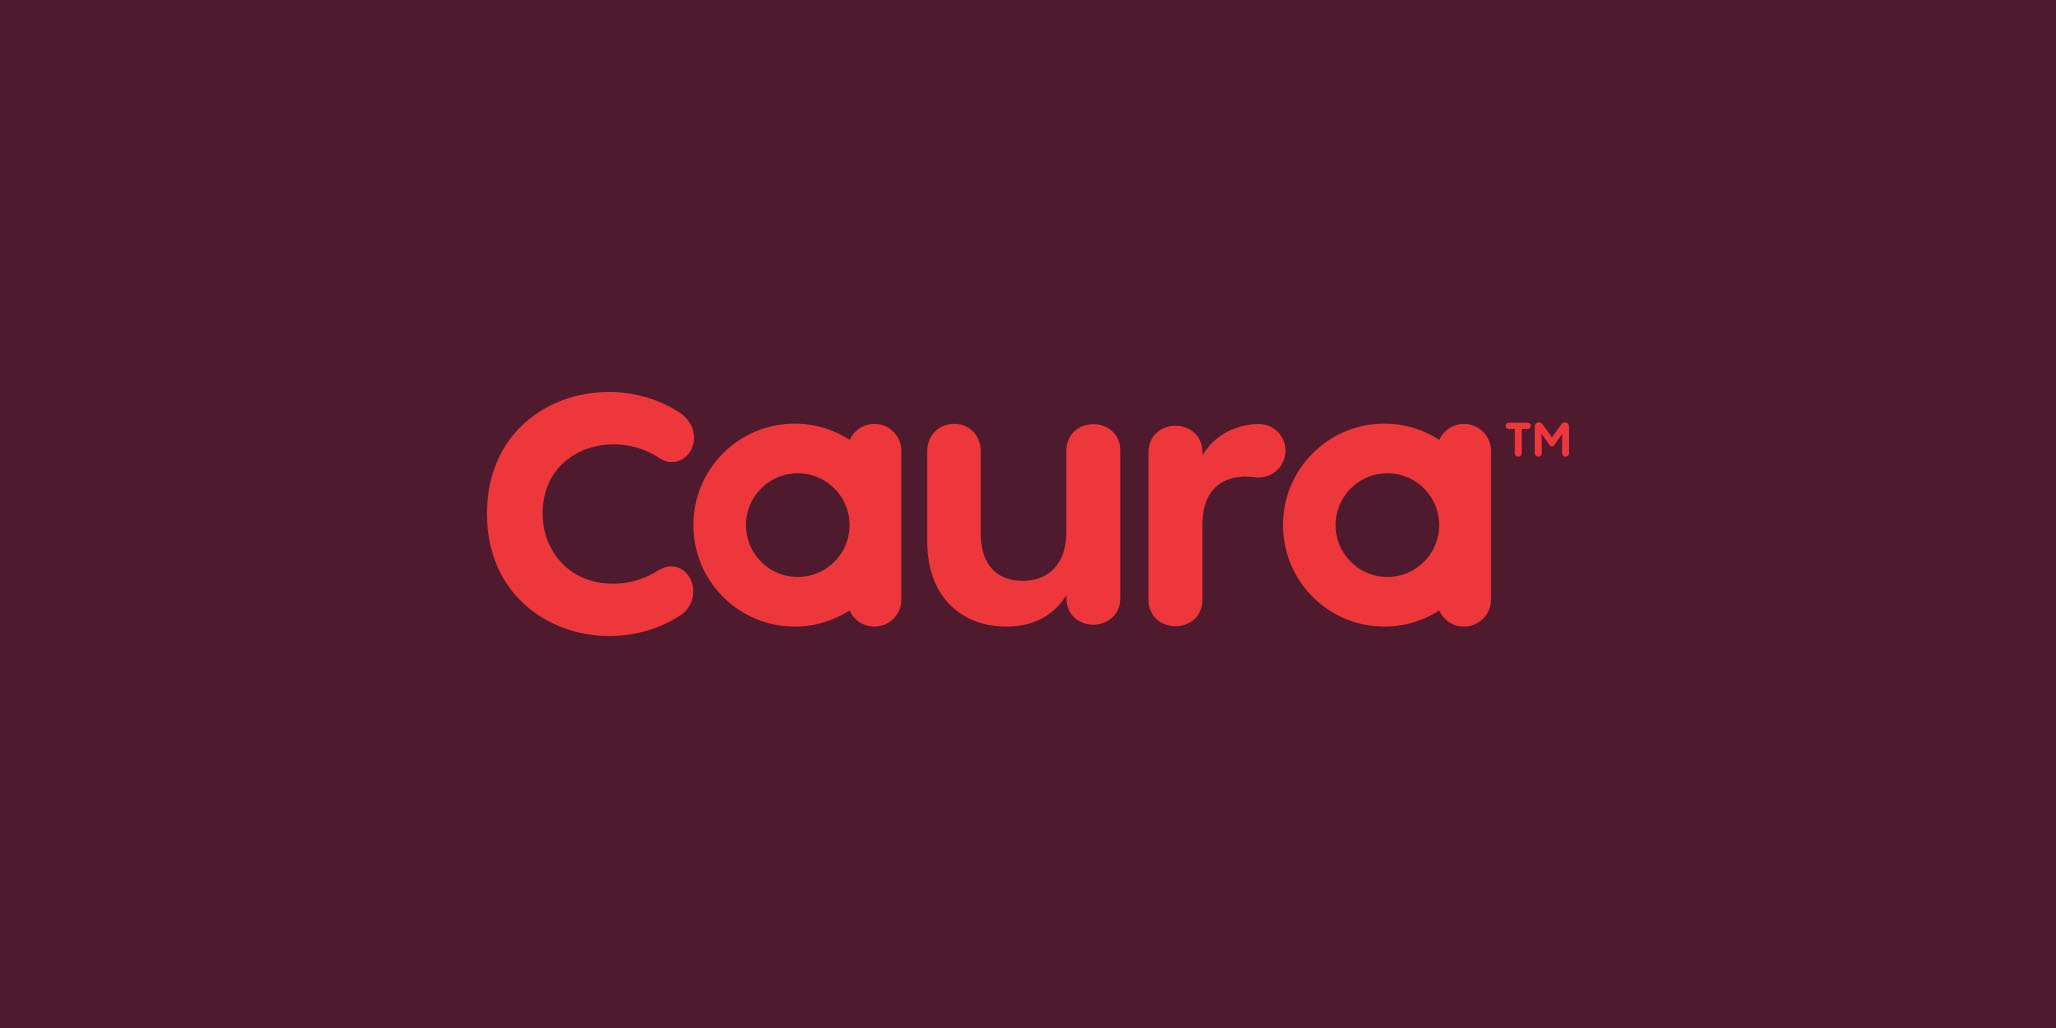 Rebrand for Caura by Percept